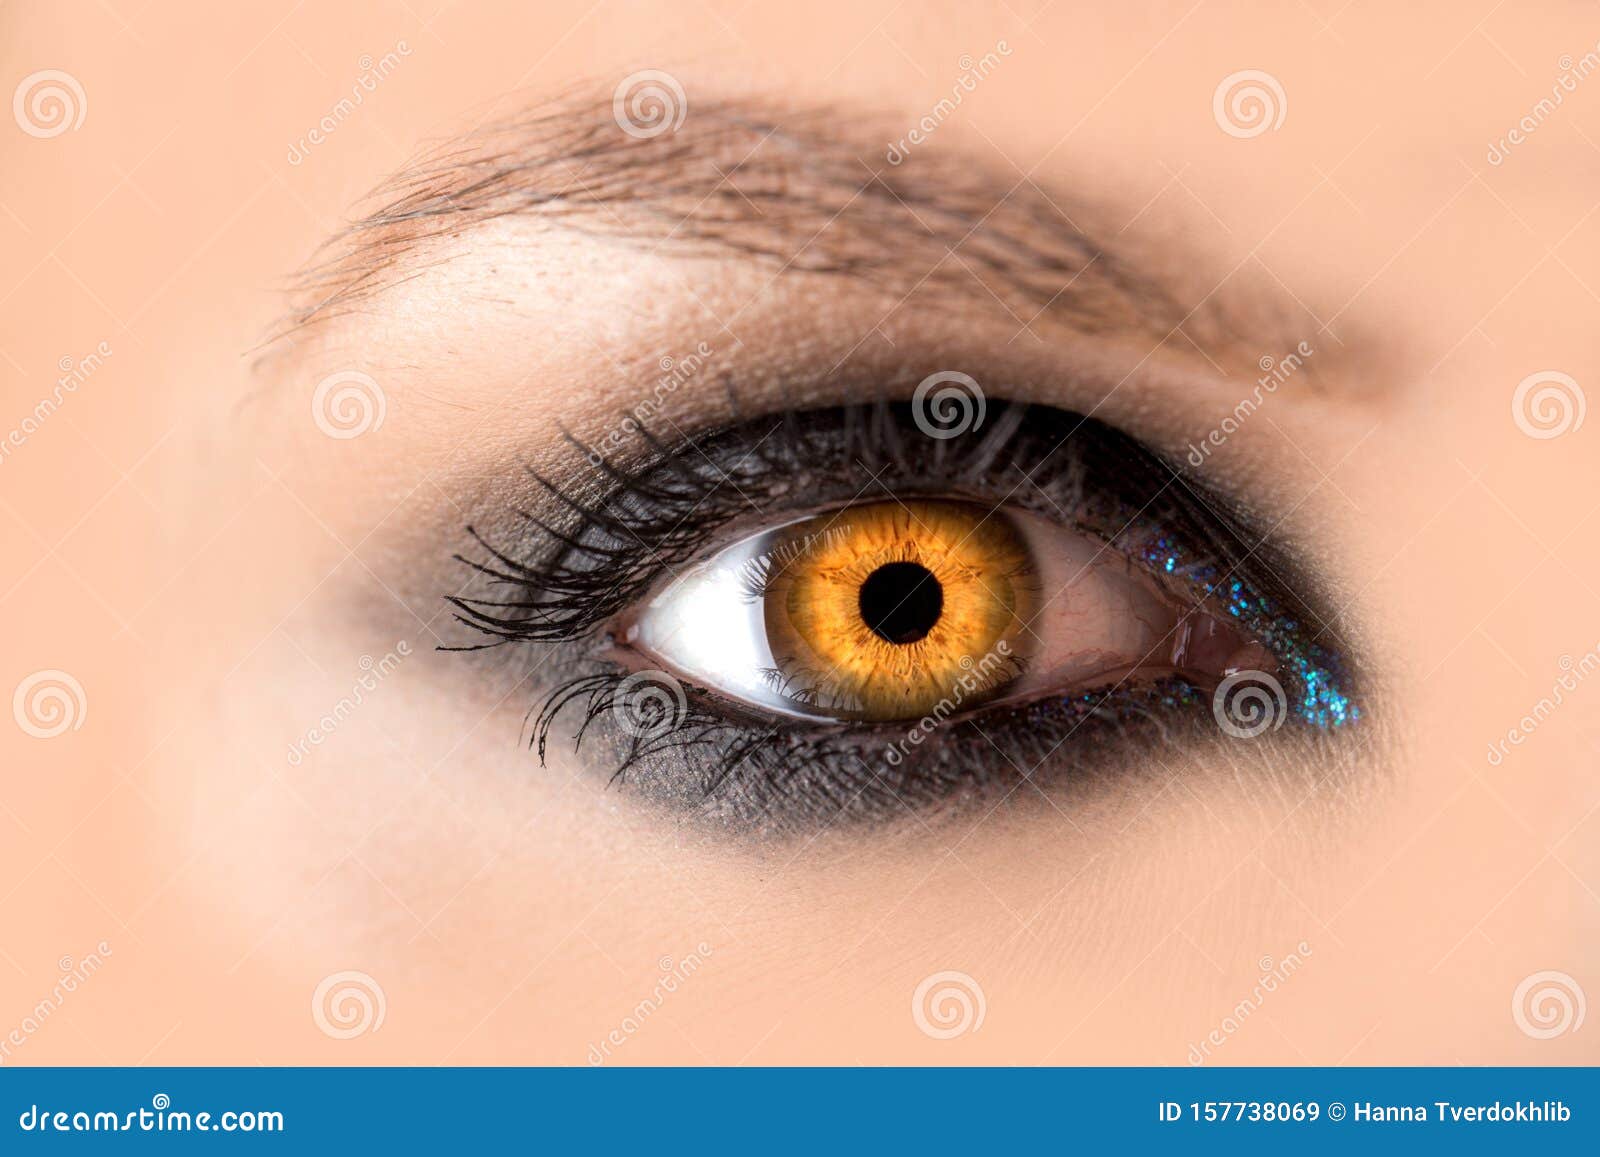 Amber Eye Color, Blog